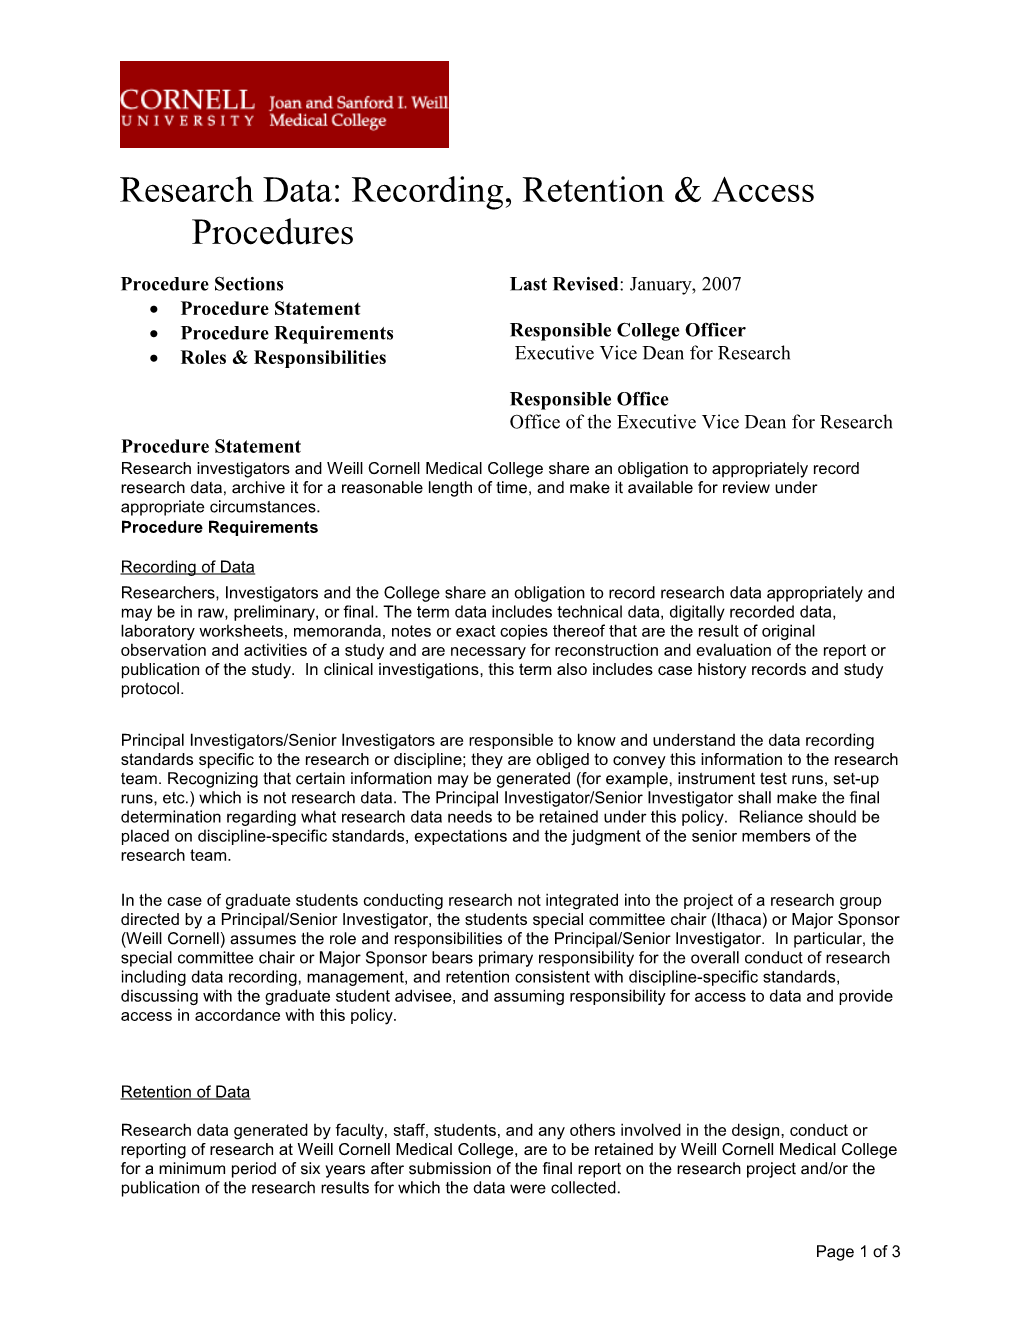 Research Data: Recording, Retention & Access Procedures